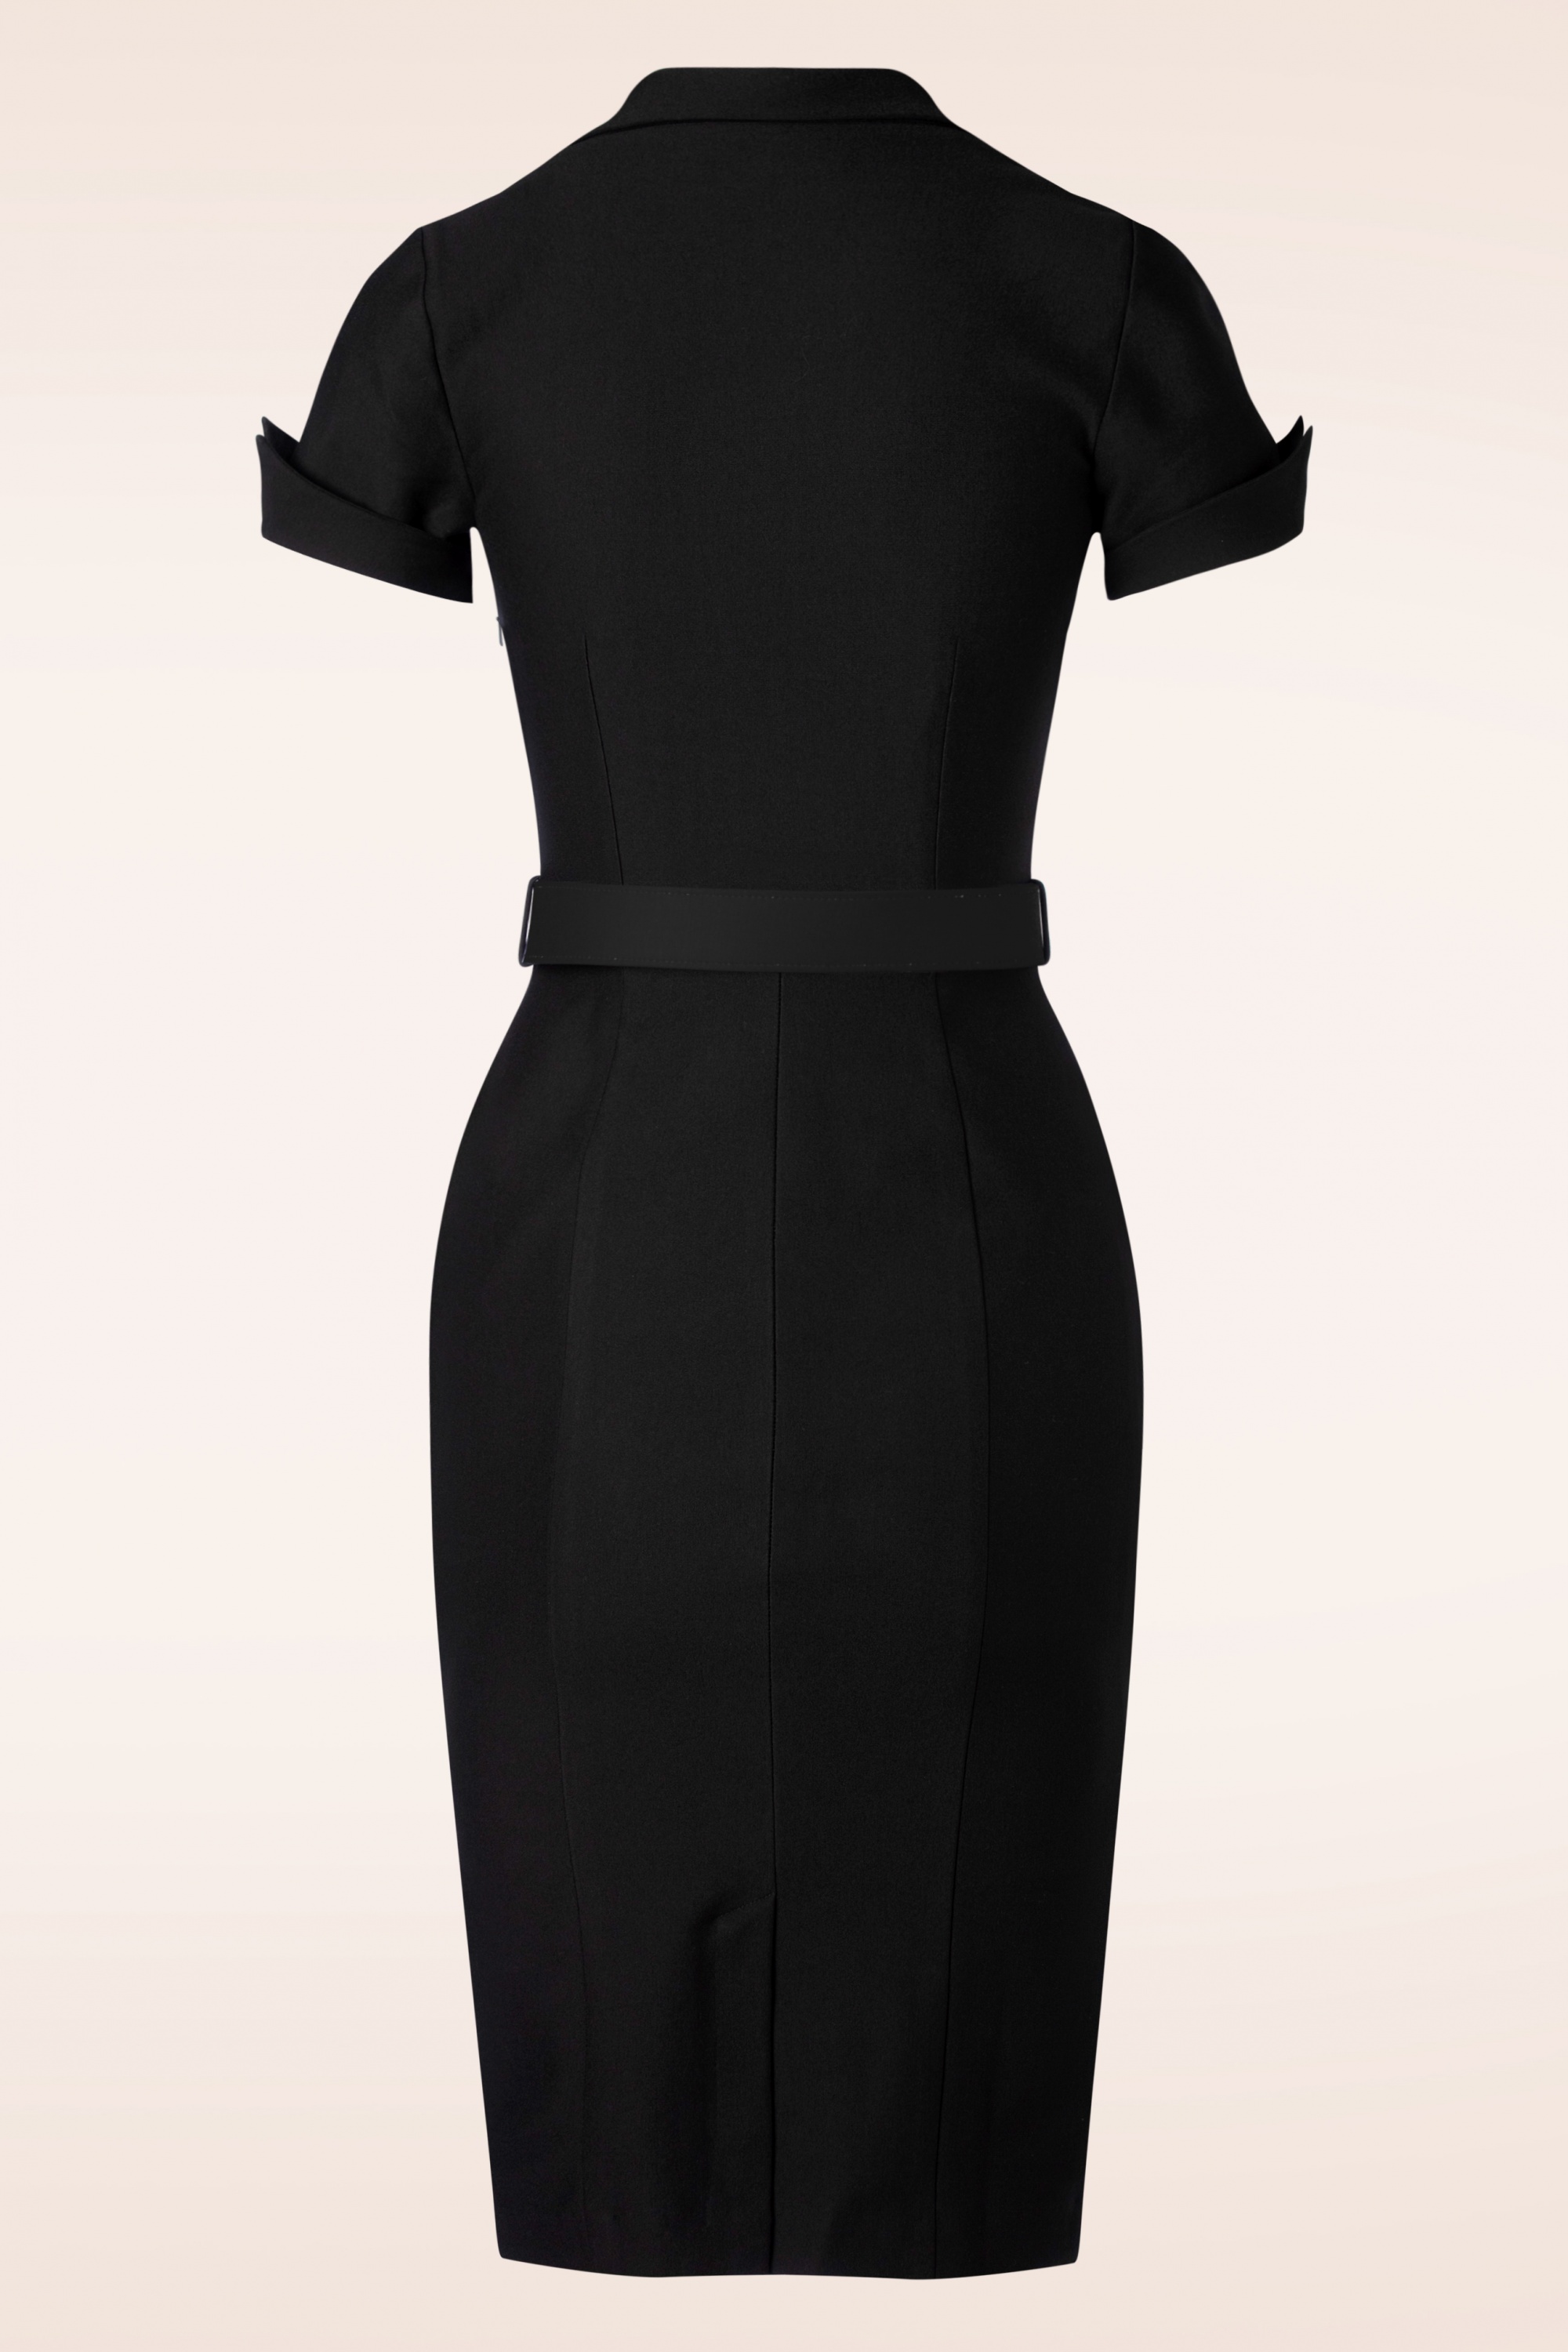 Zoe Vine - Loïs pencil jurk in zwart 5